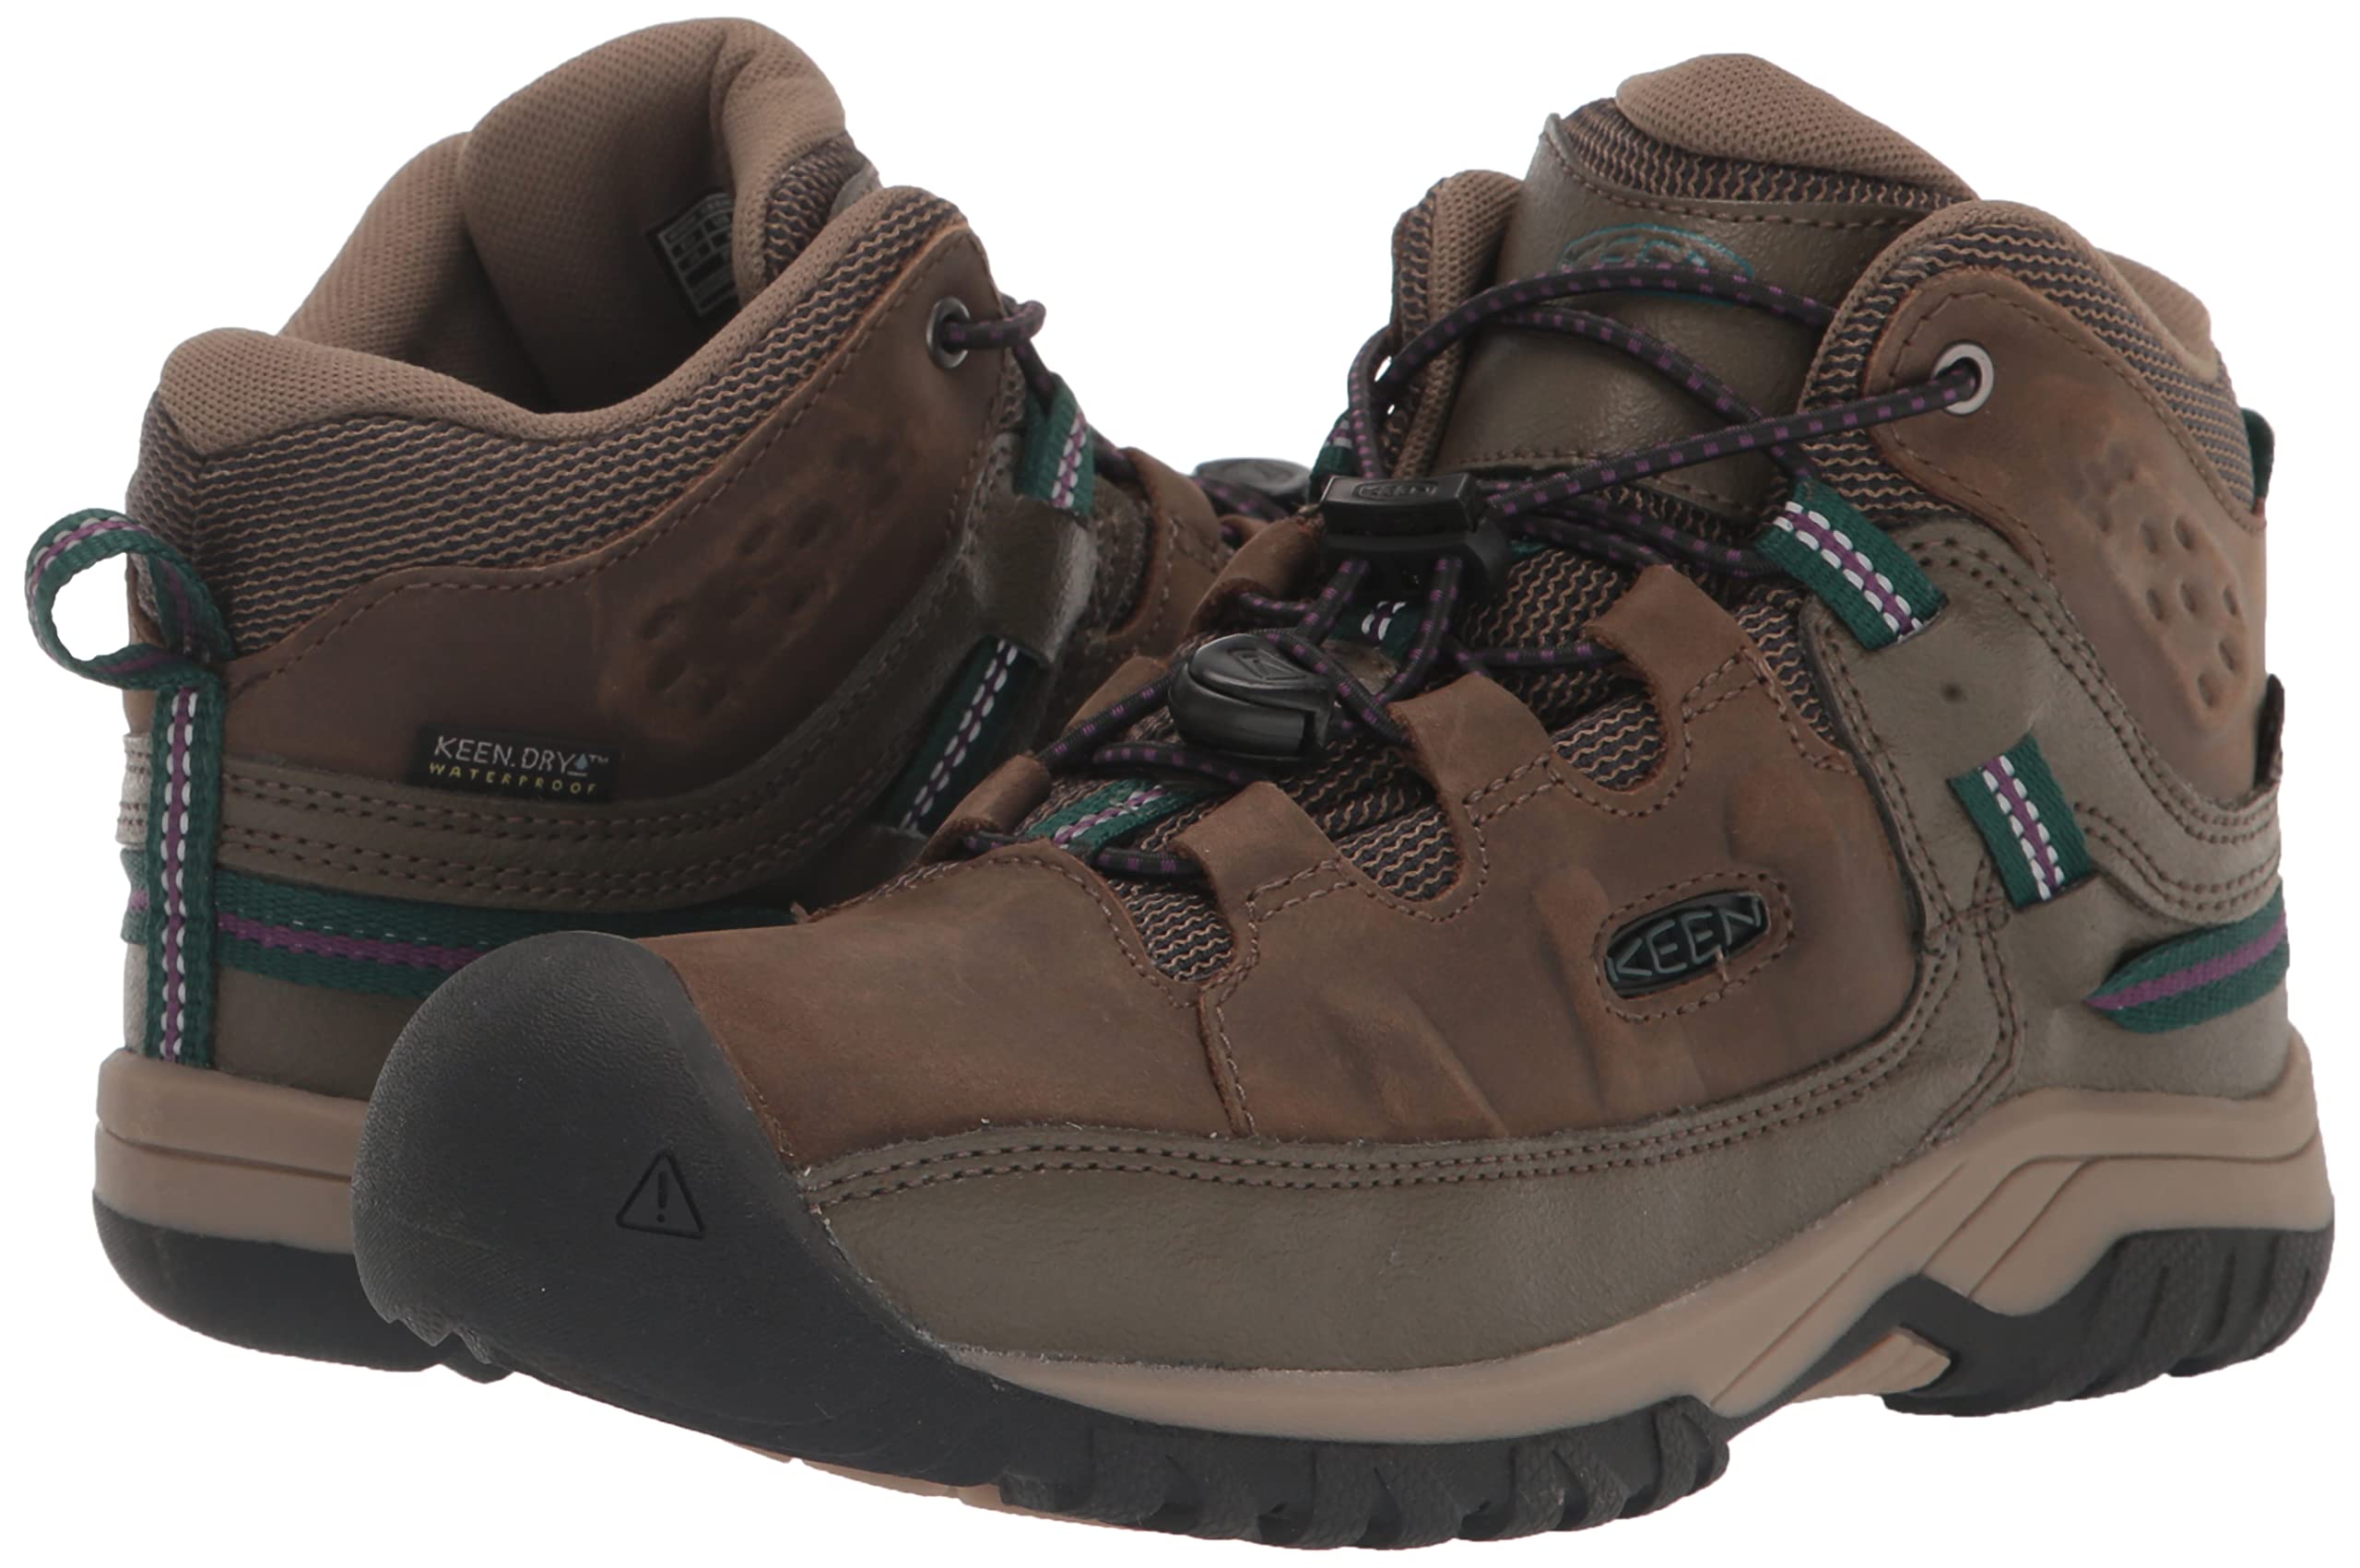 KEEN Targhee Mid Height Waterproof Hiking Boots, 3 US Unisex Big Kid